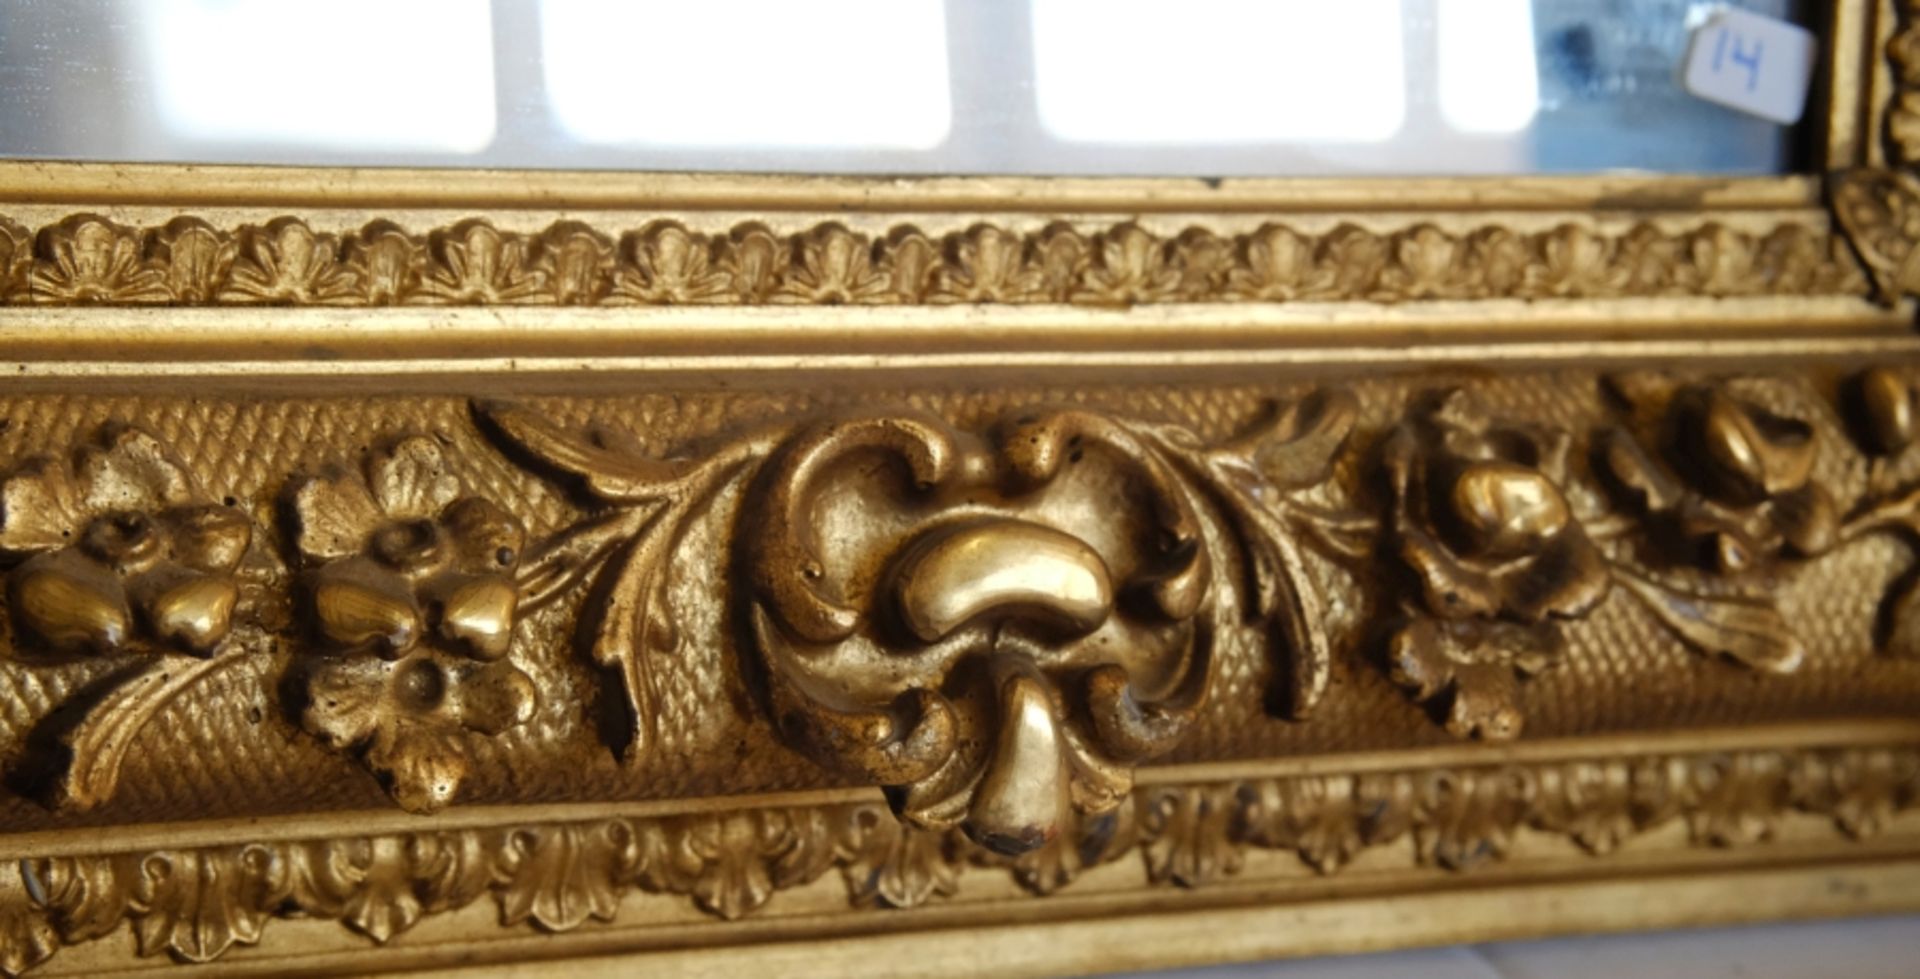 Spiegel, reich verzierter Goldrahmen, Gips-Ornamente, echt ölvergoldet, Schweiz um 1900, 75x49cm. - Bild 4 aus 5